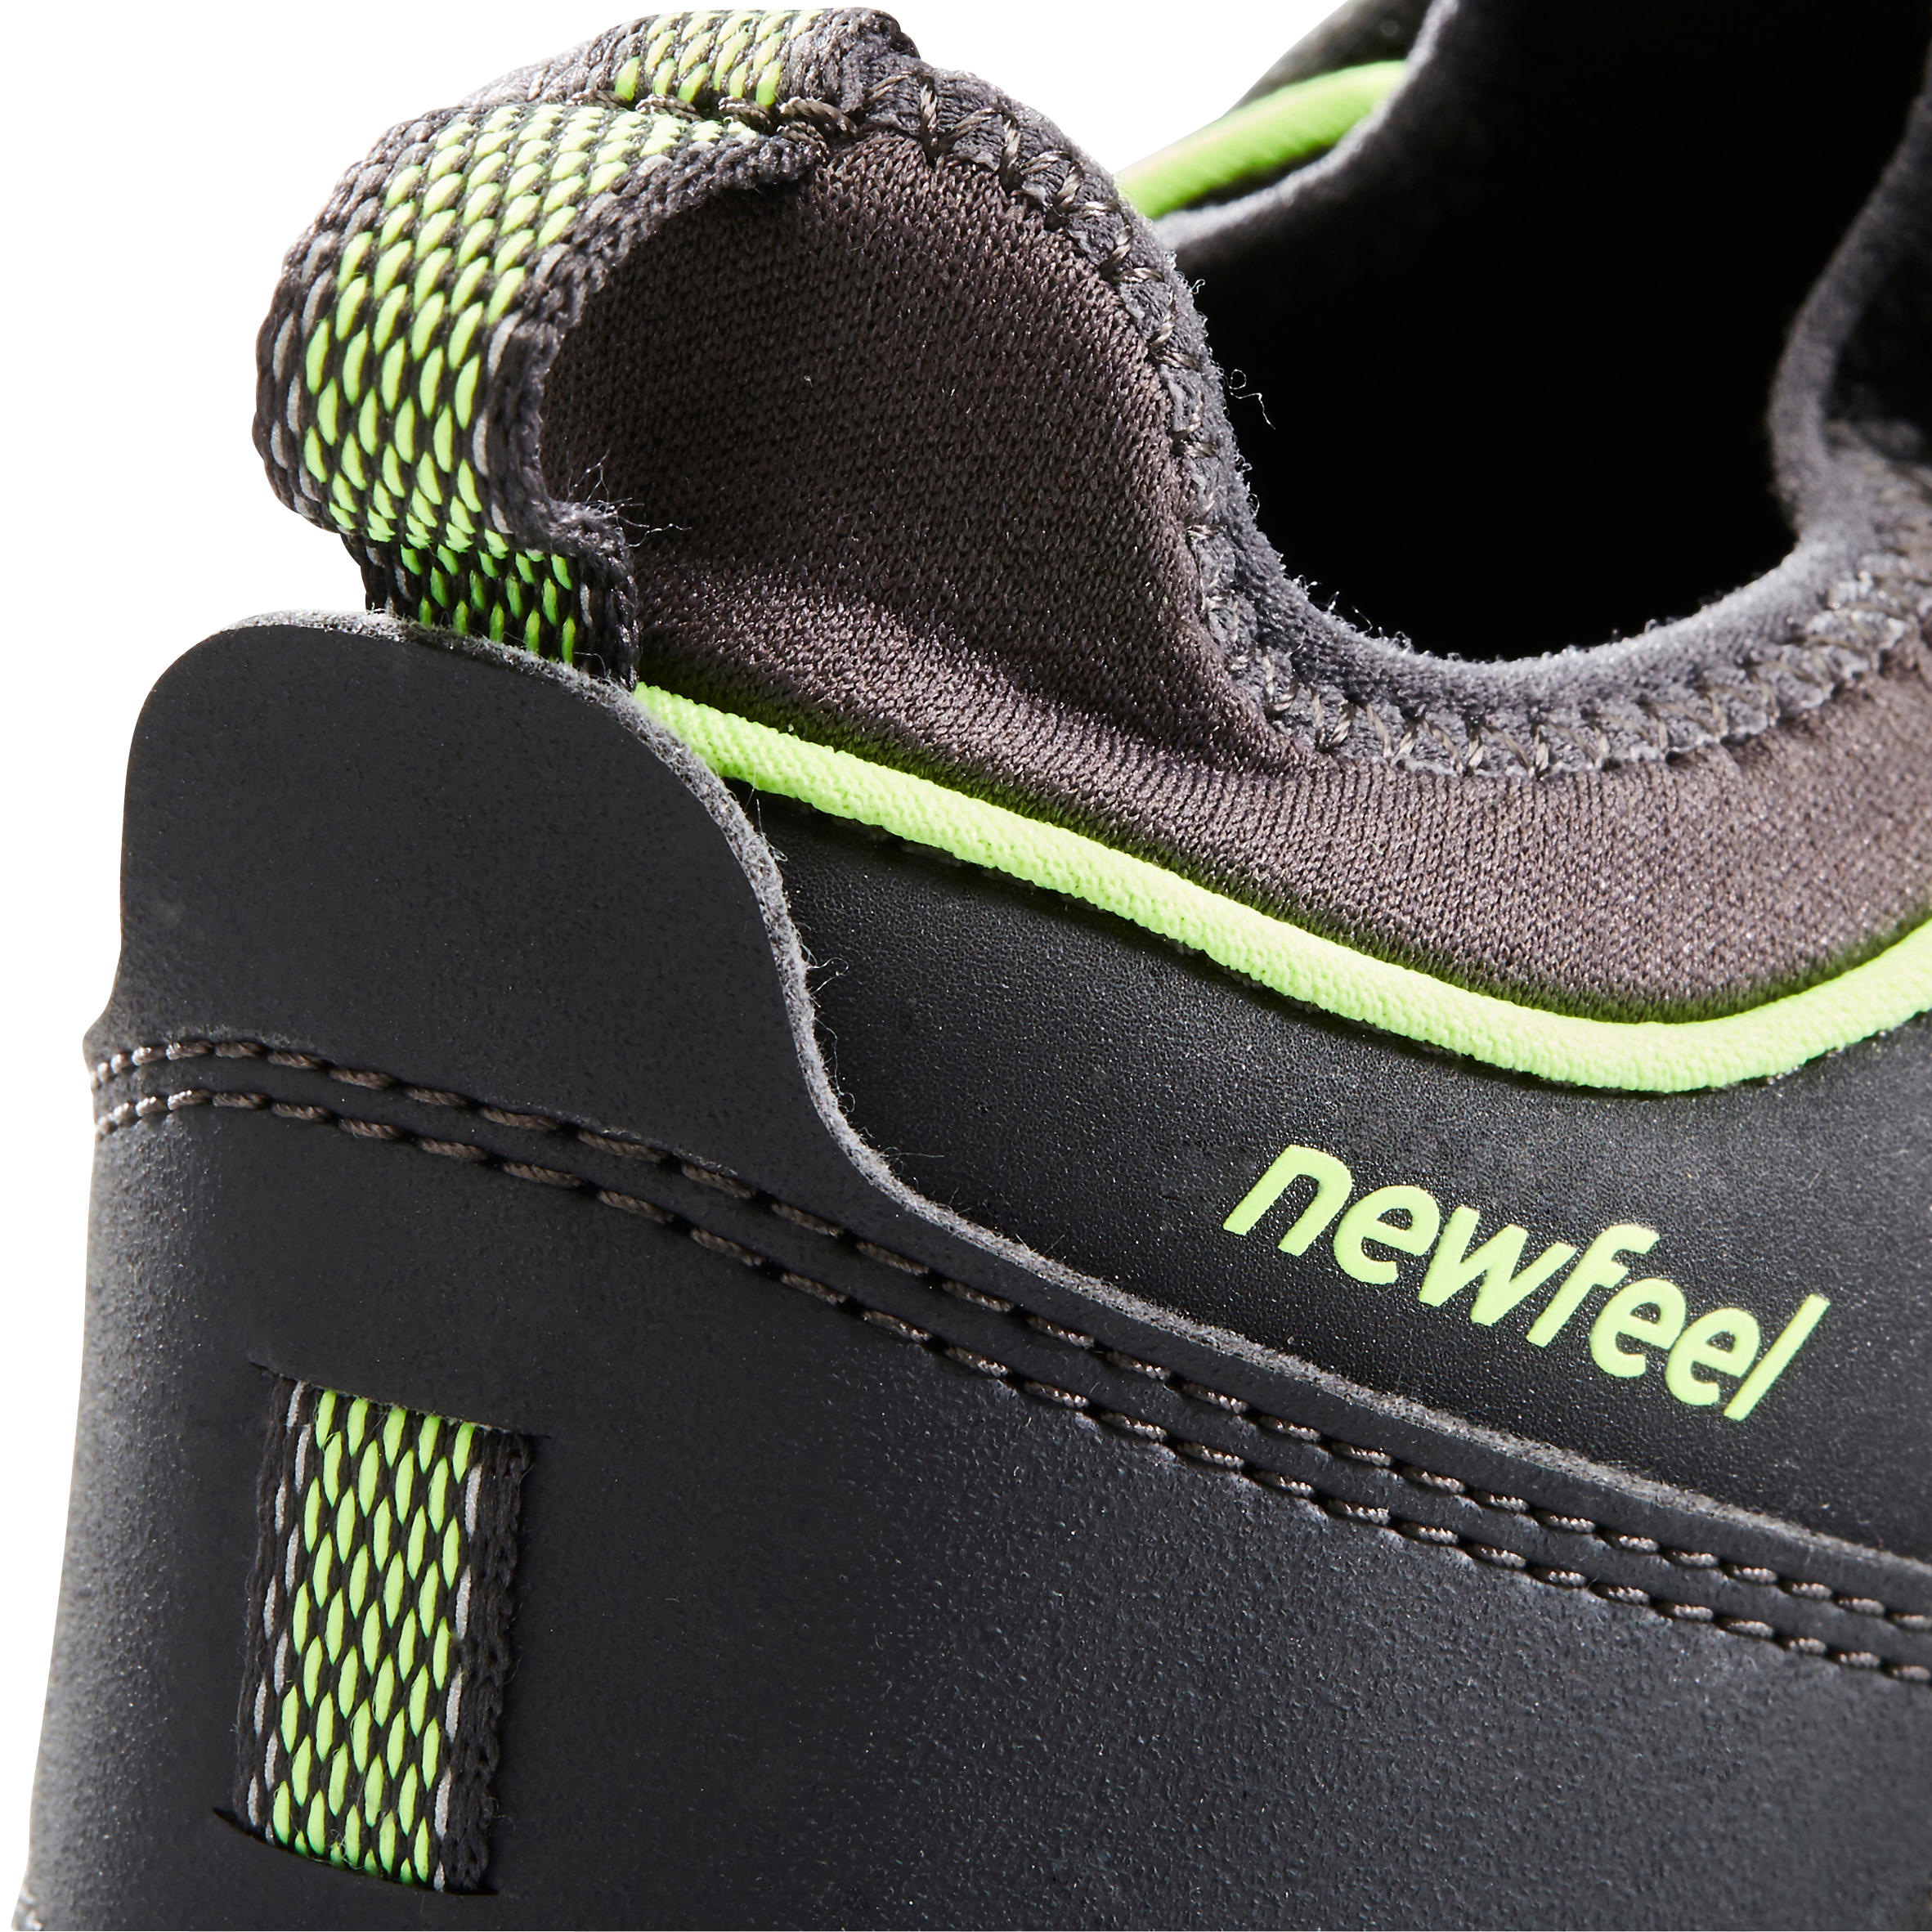 NW 580 Children's Nordic Walking Shoes grey green 9/11